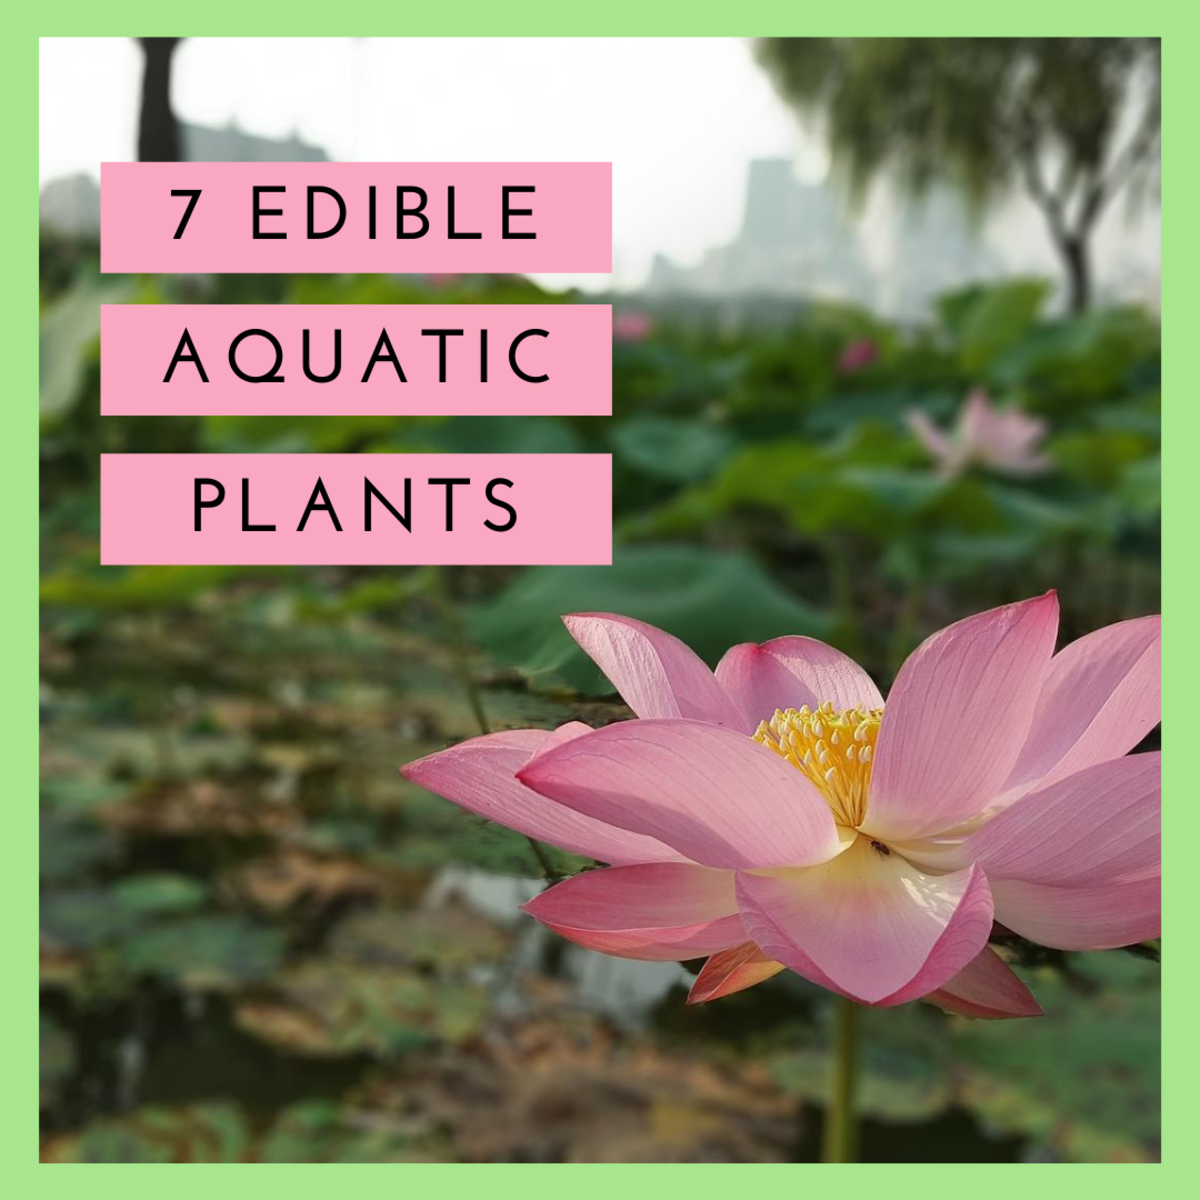 A Guide to Edible Aquatic Plants